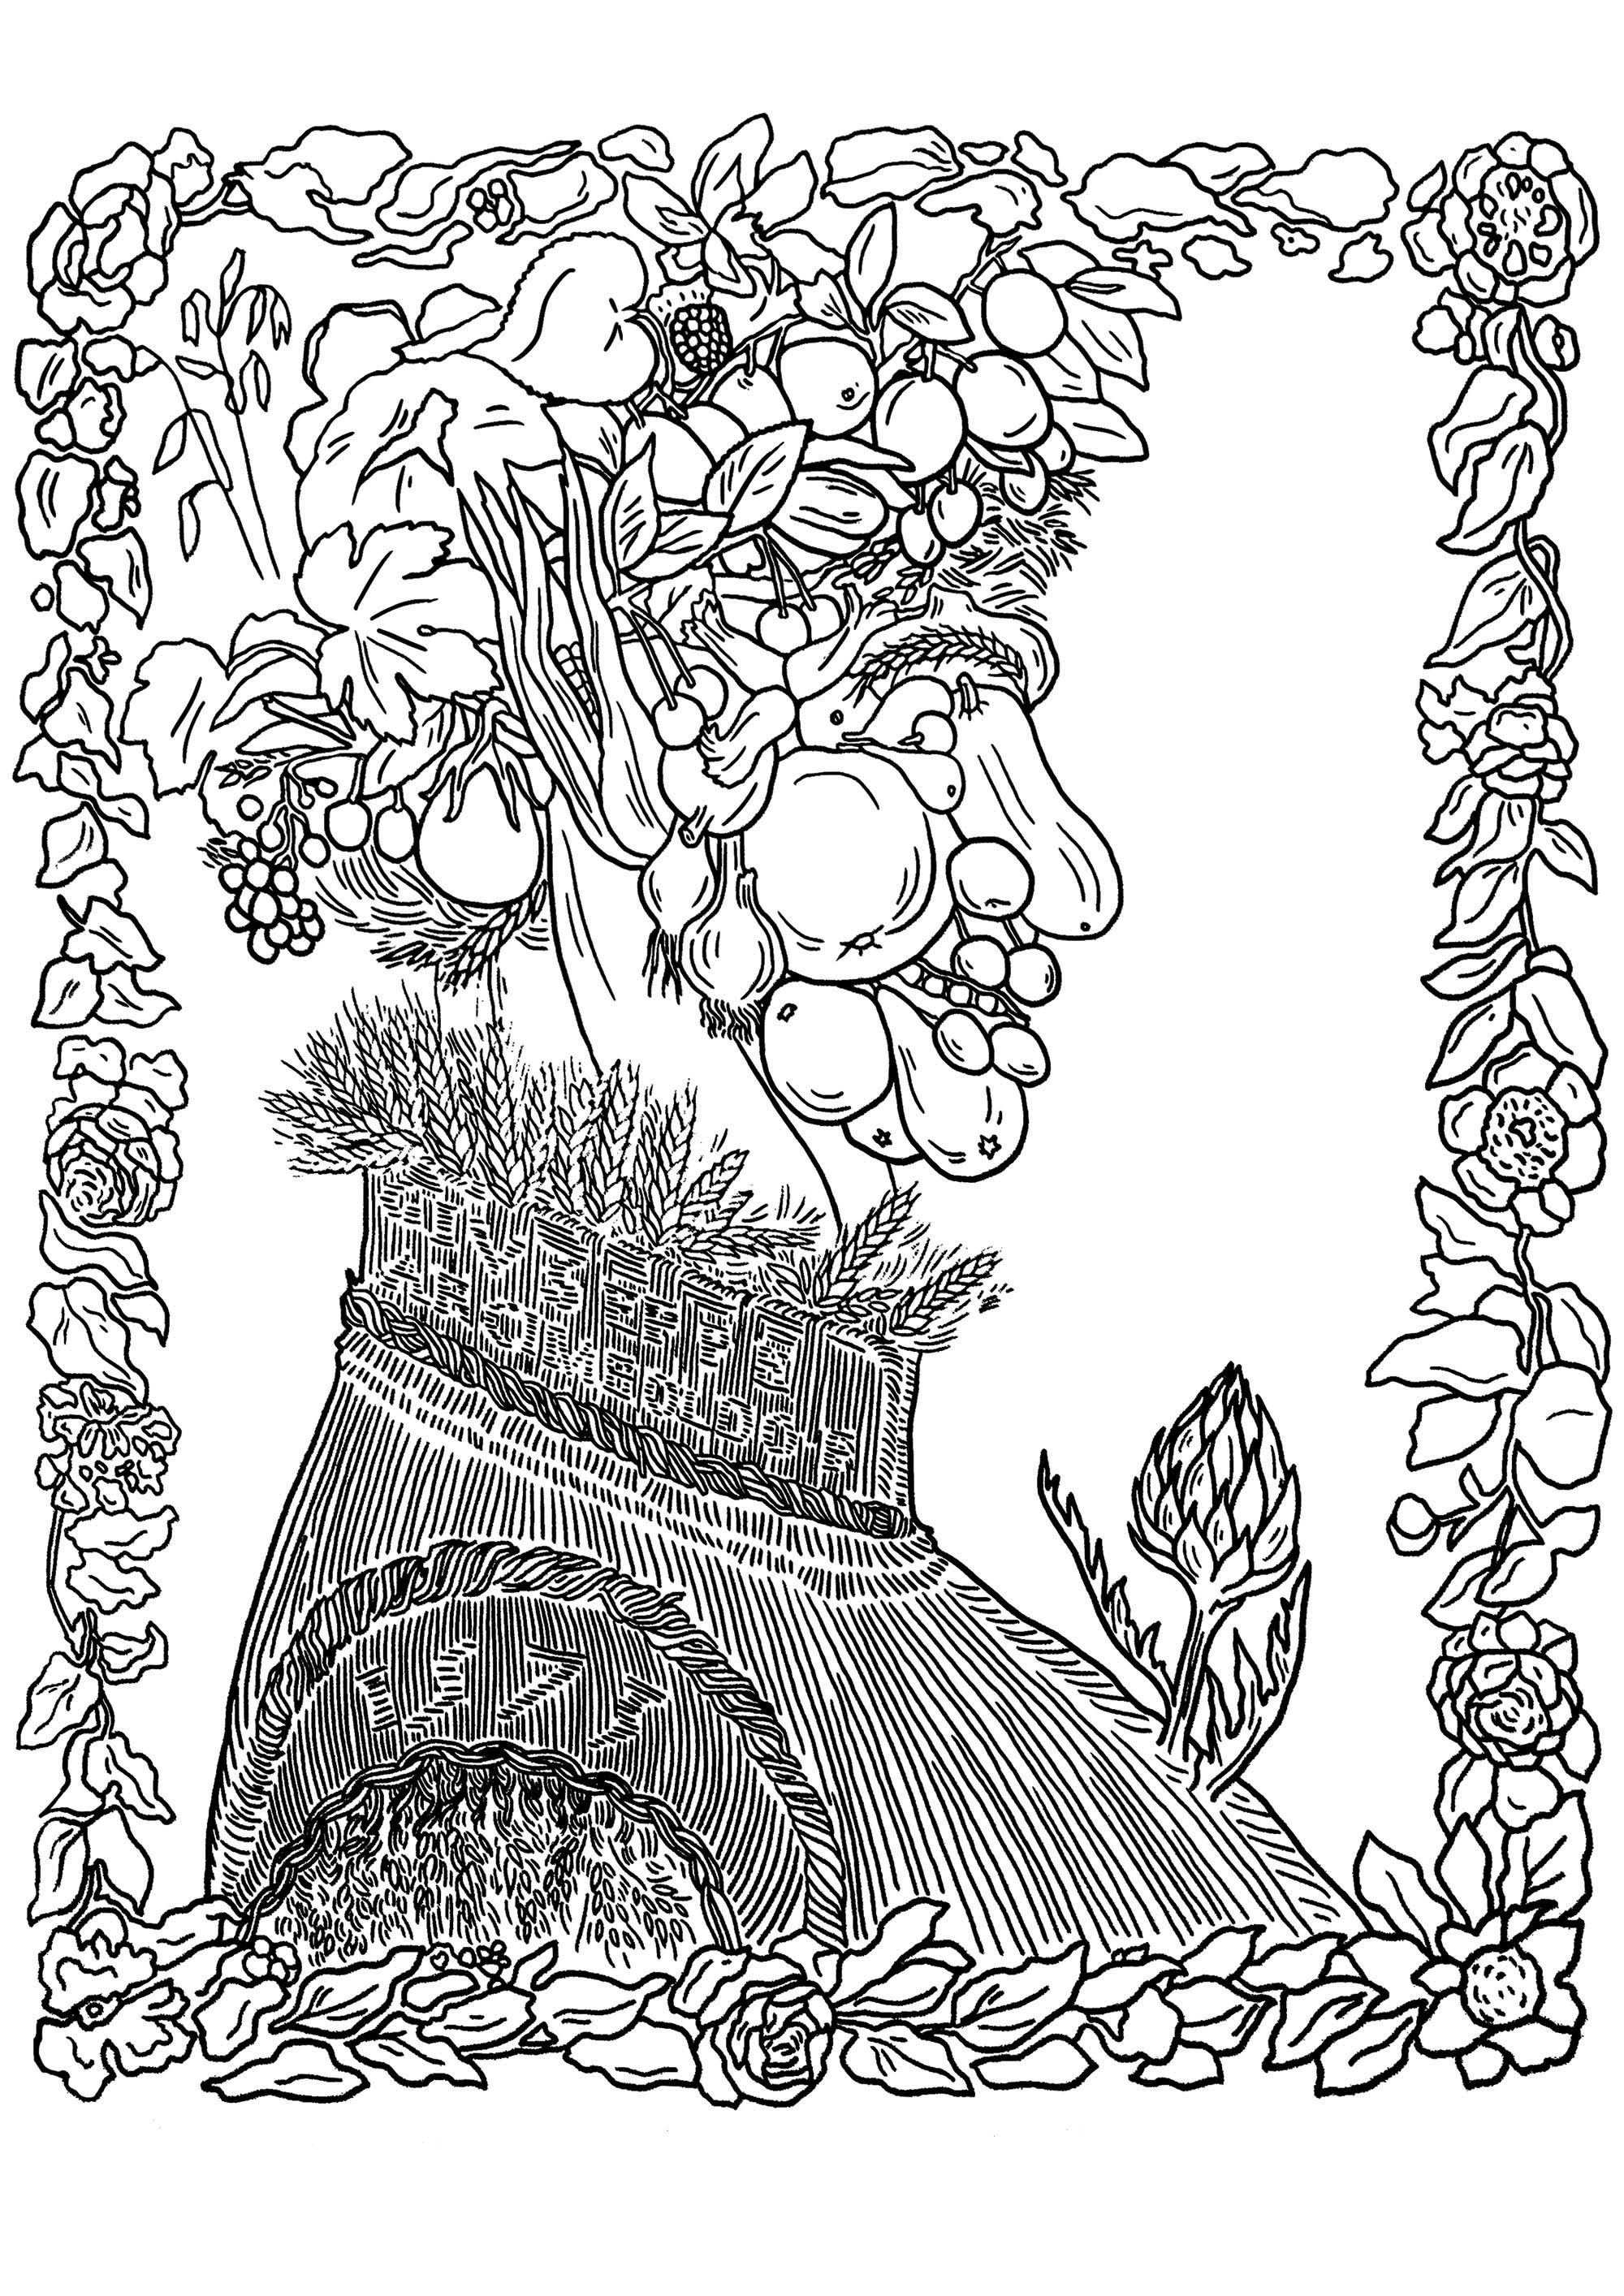 Una cabeza de retrato hecha enteramente de frutas, verduras y flores, por Giuseppe Arcimboldo : Verano